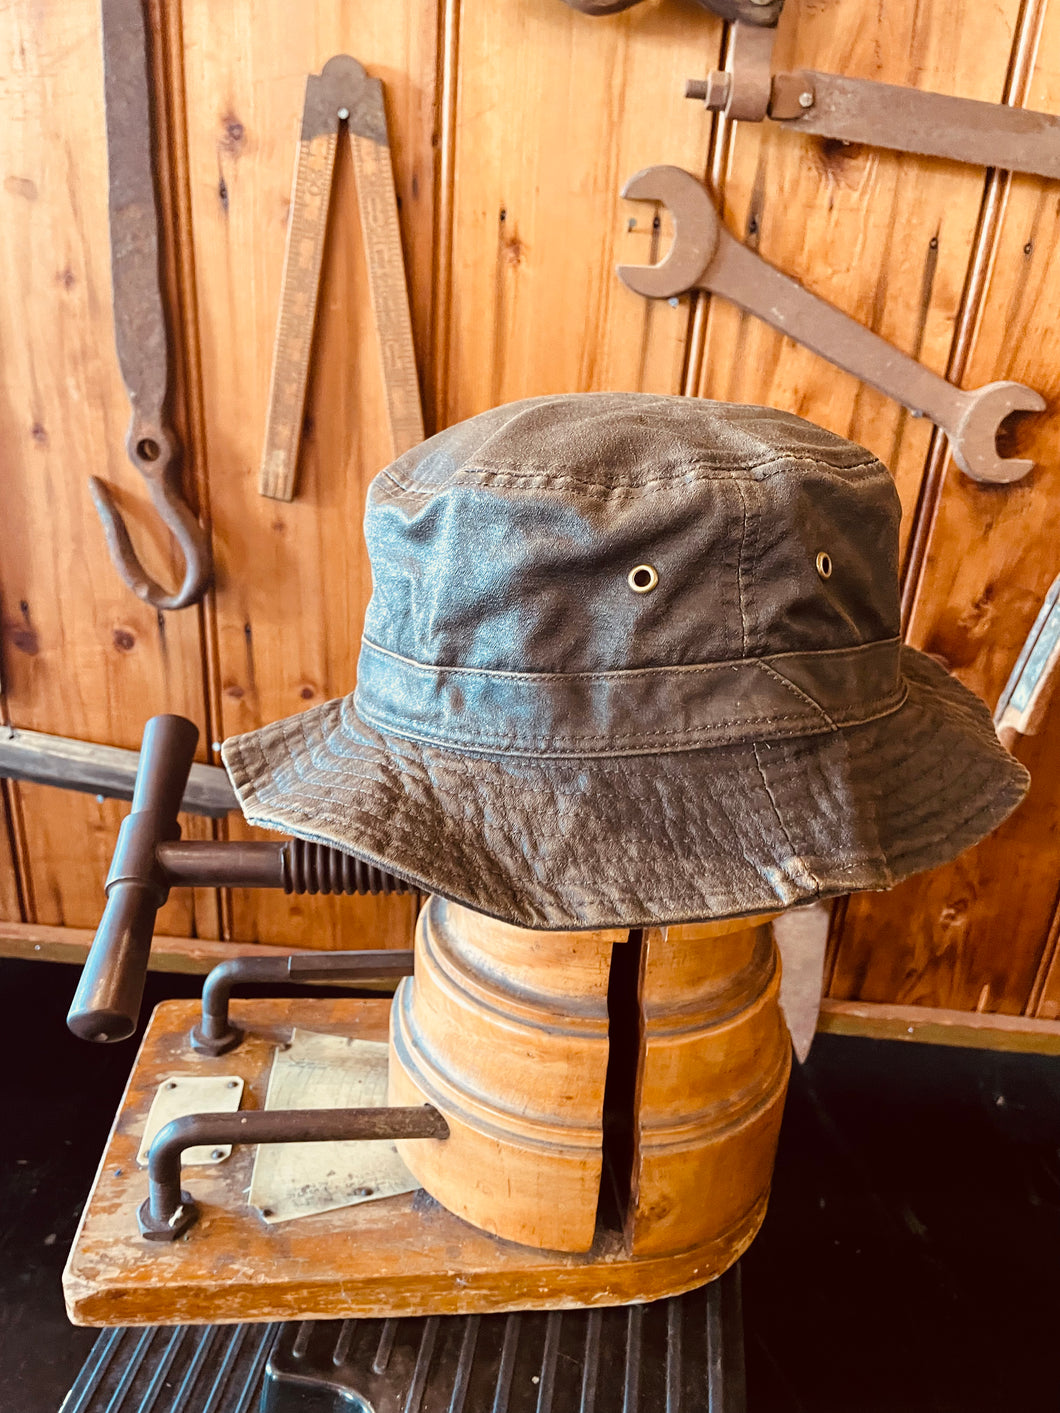 Waxed Cotton Bucket Hat